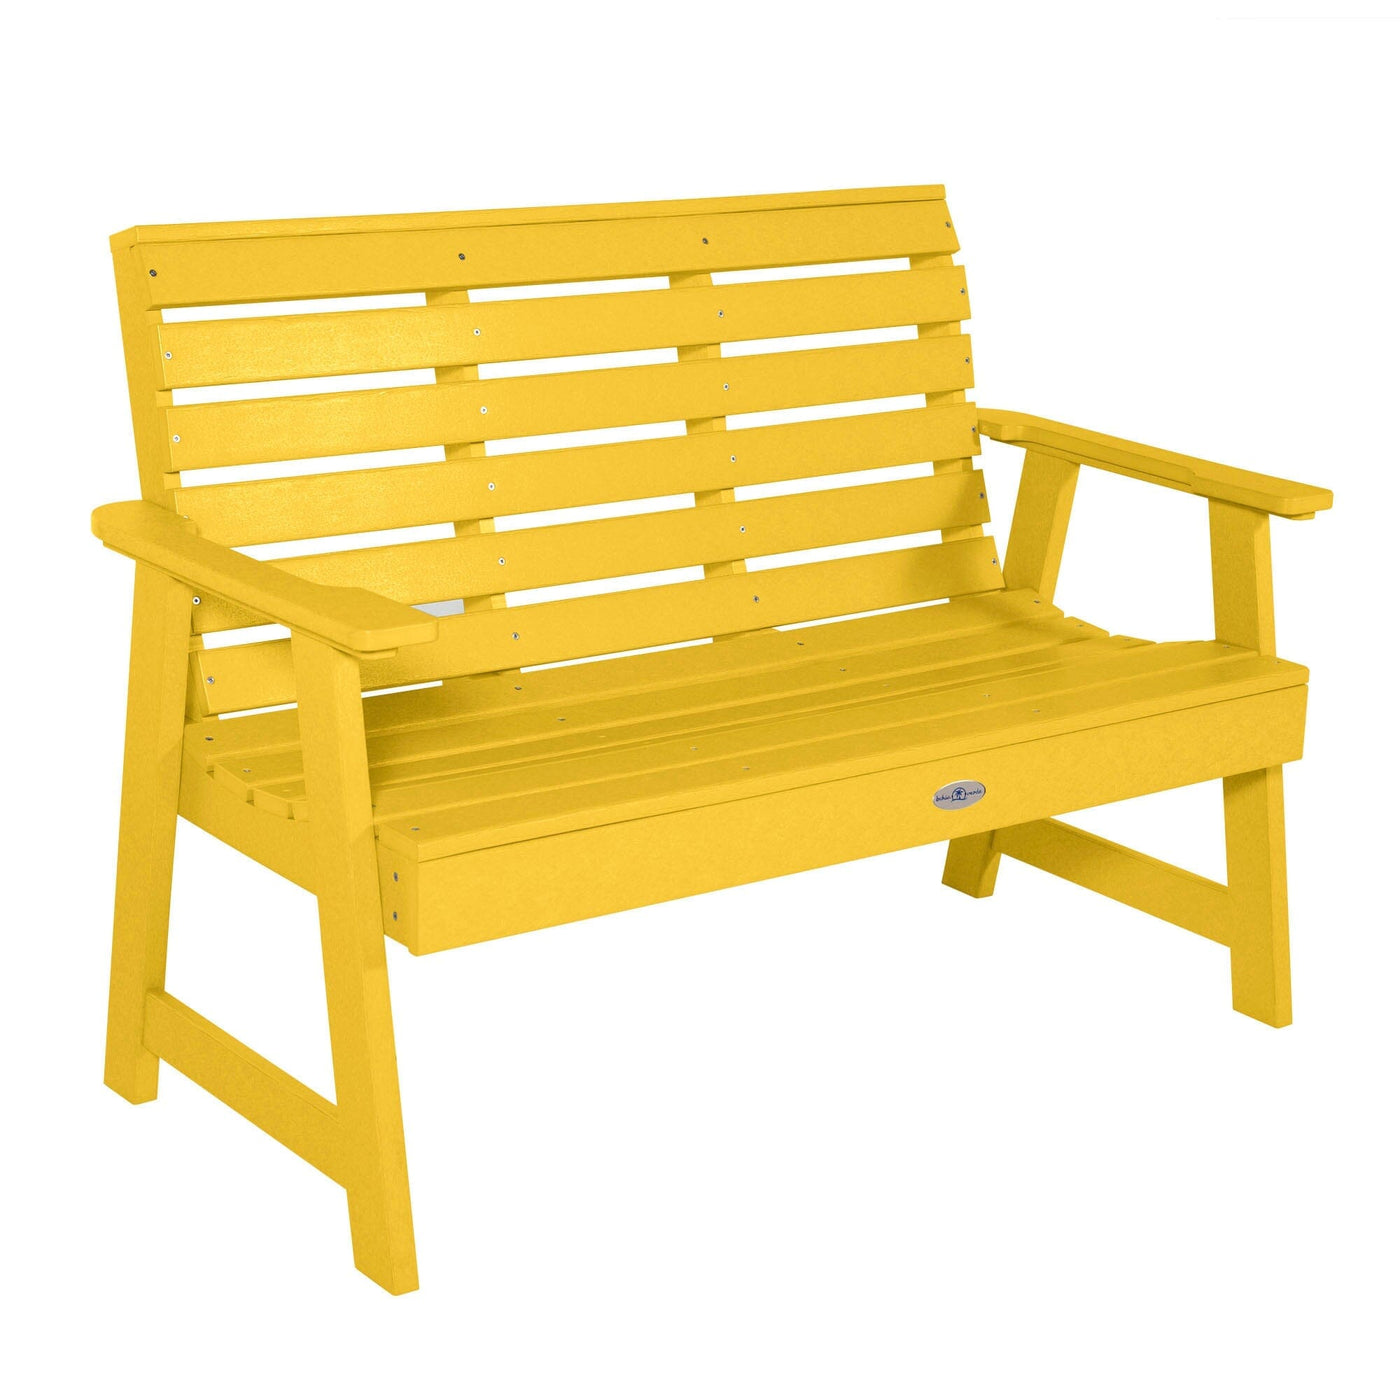 Riverside Garden Bench 4ft Bench Bahia Verde Outdoors Sunbeam Yellow 